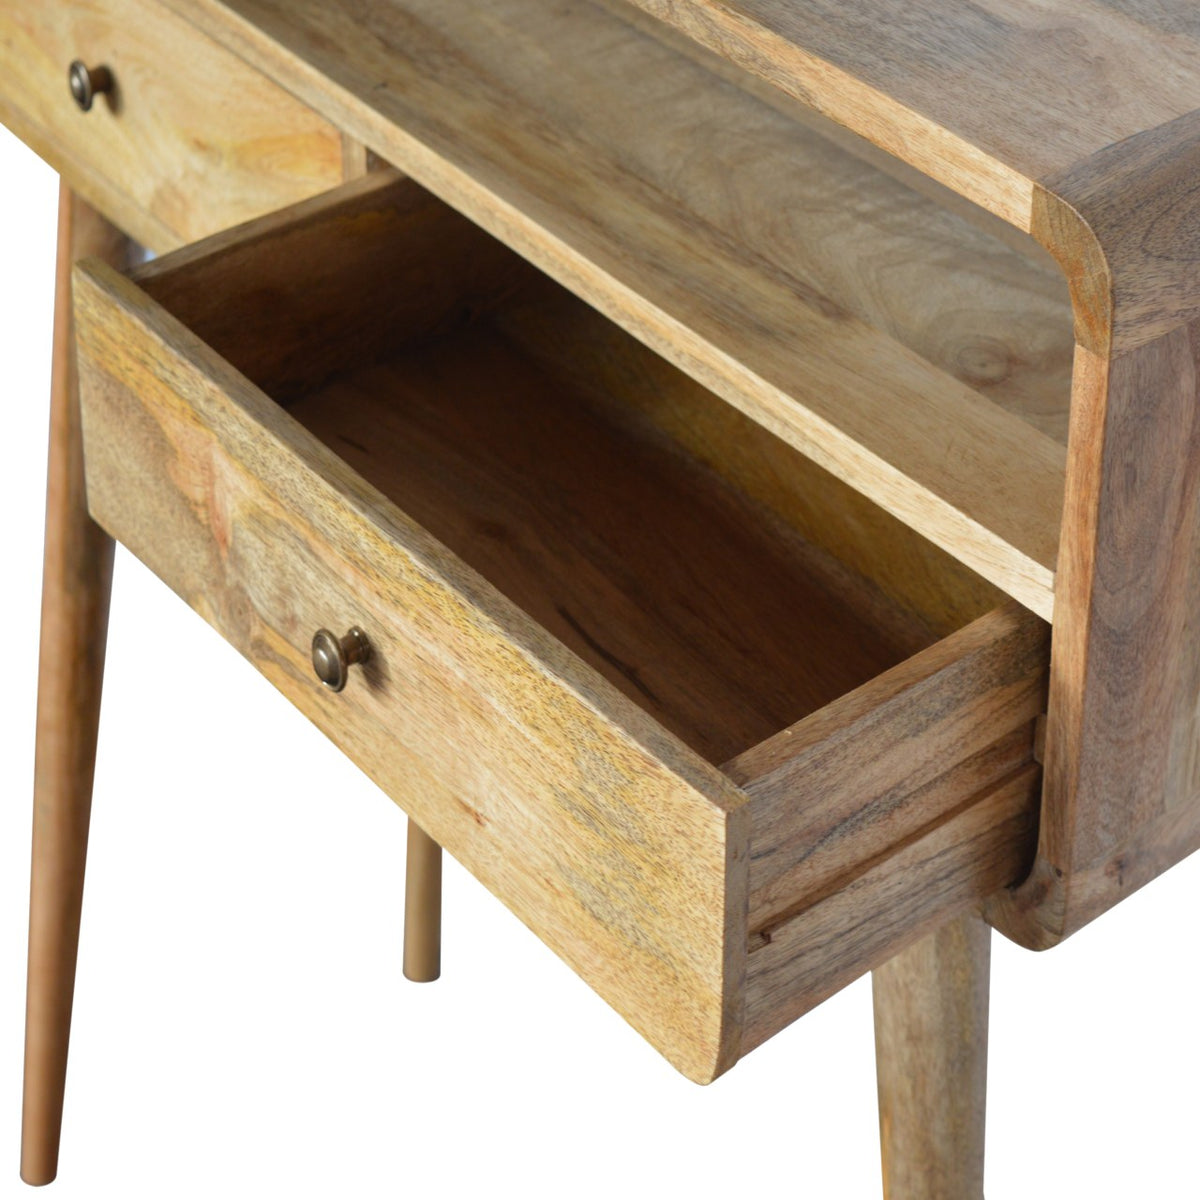 Oak console table for sale uk